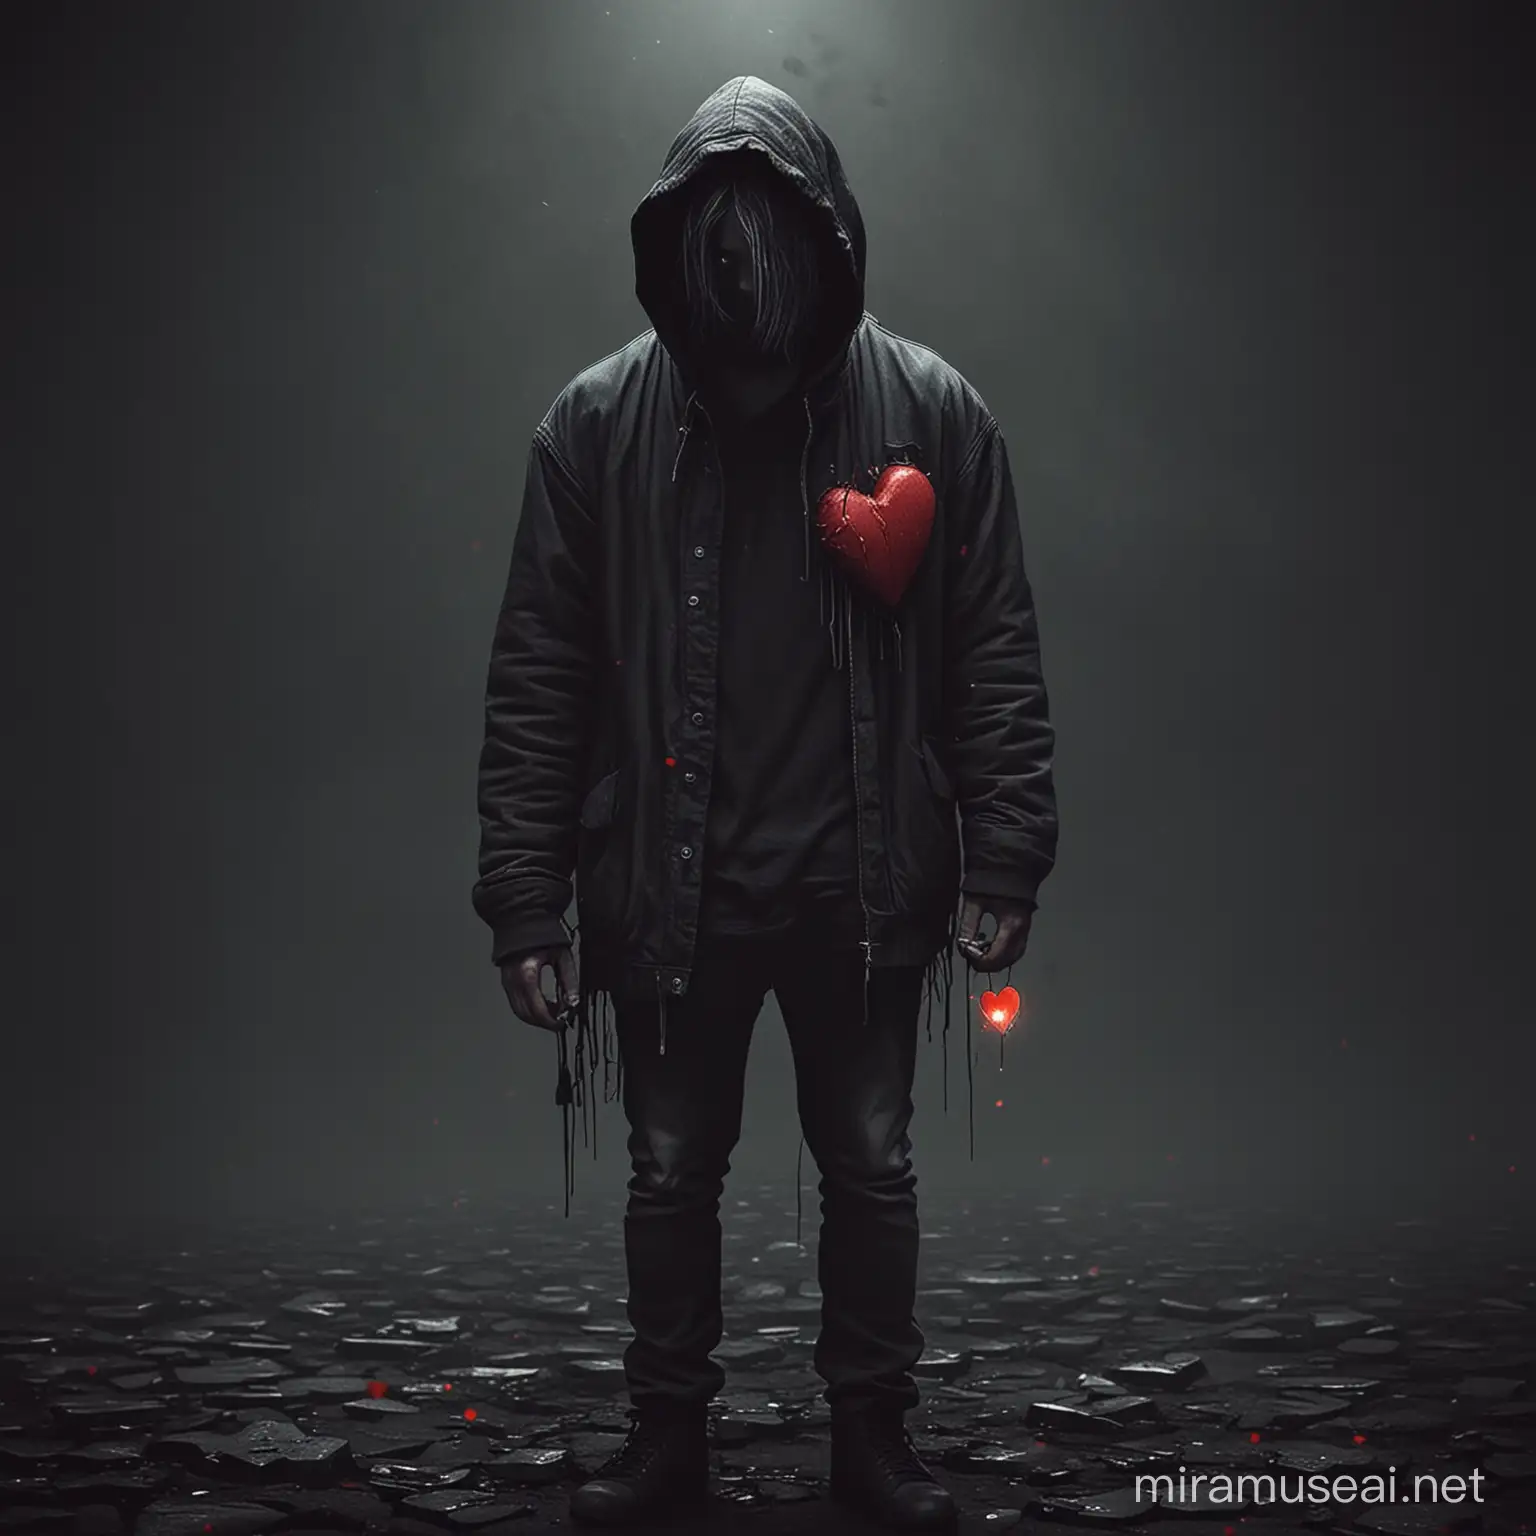 dark alone guy with broken heart
